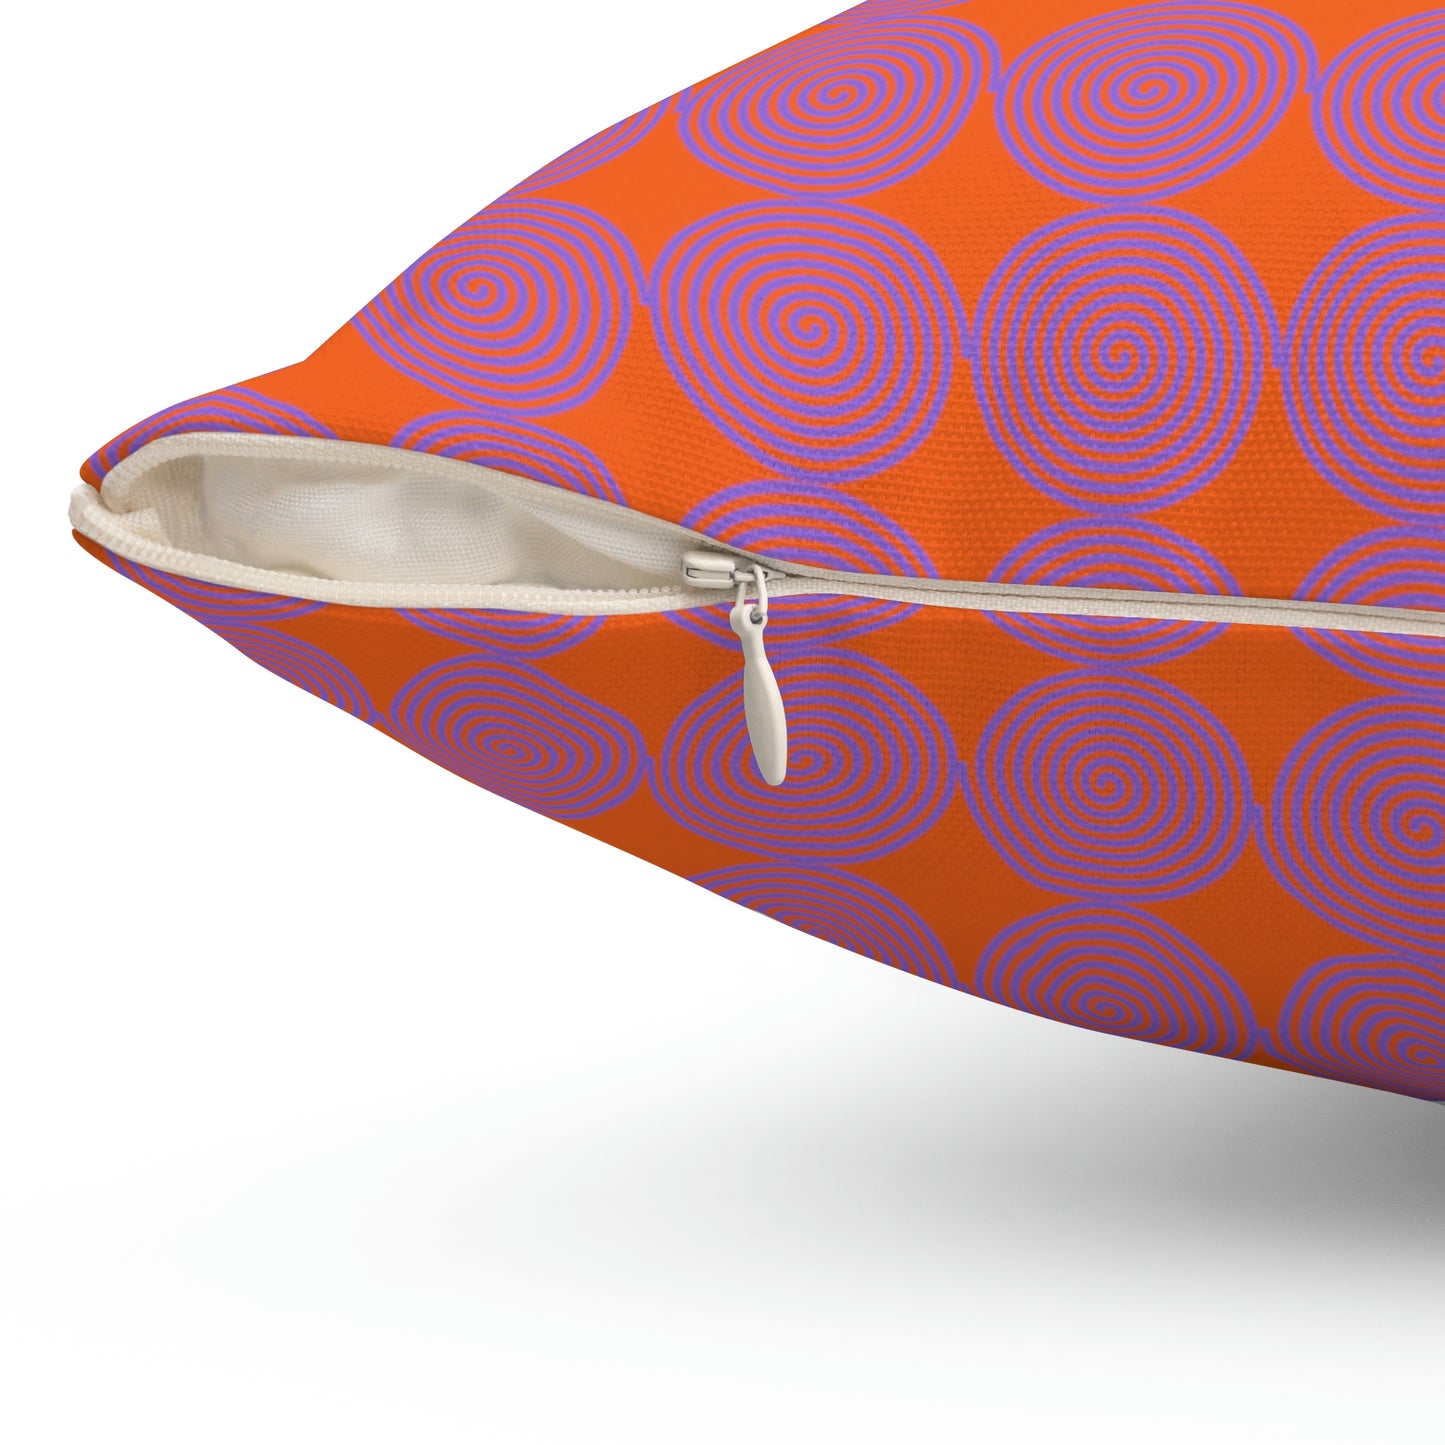 Spun Polyester Square Pillow Case ”Purple Spiral on Orange”